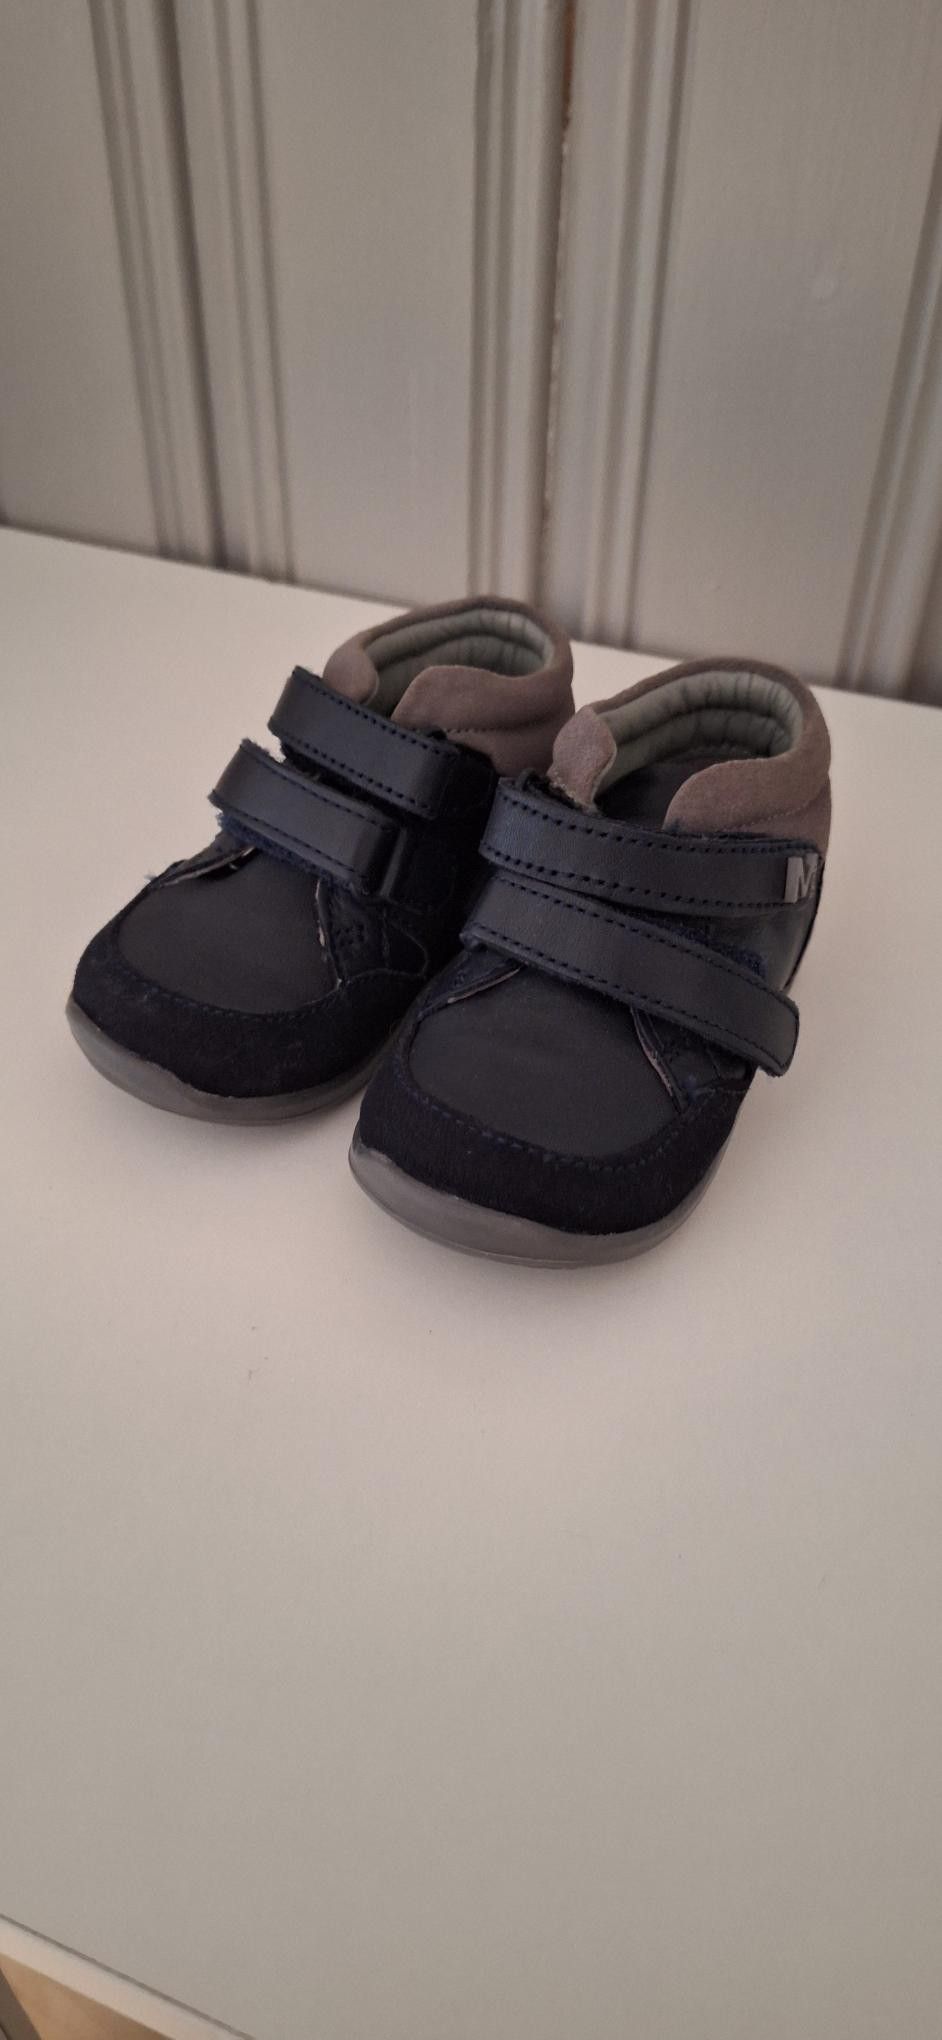 Mayoral vauvan kengät